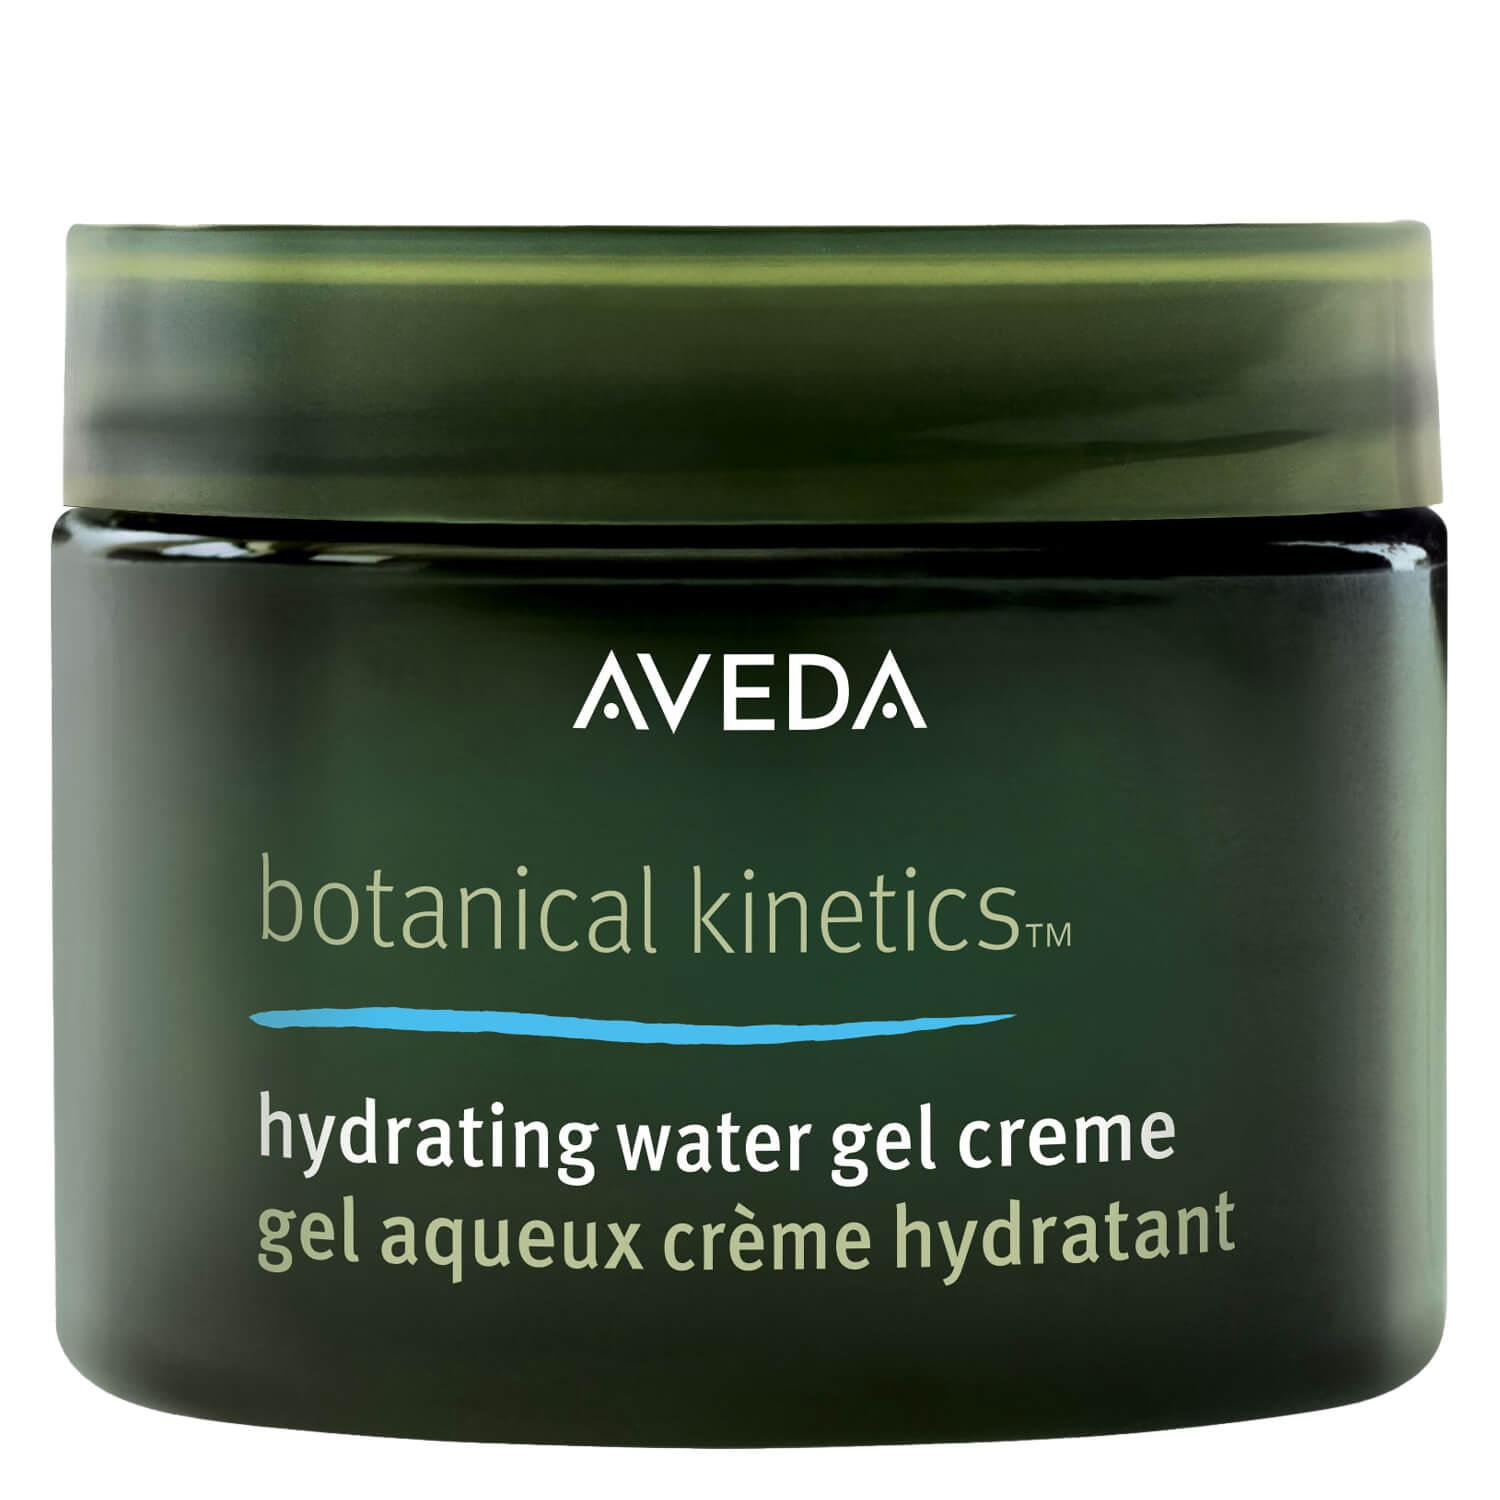 botanical kinetics - hydrating water gel cream